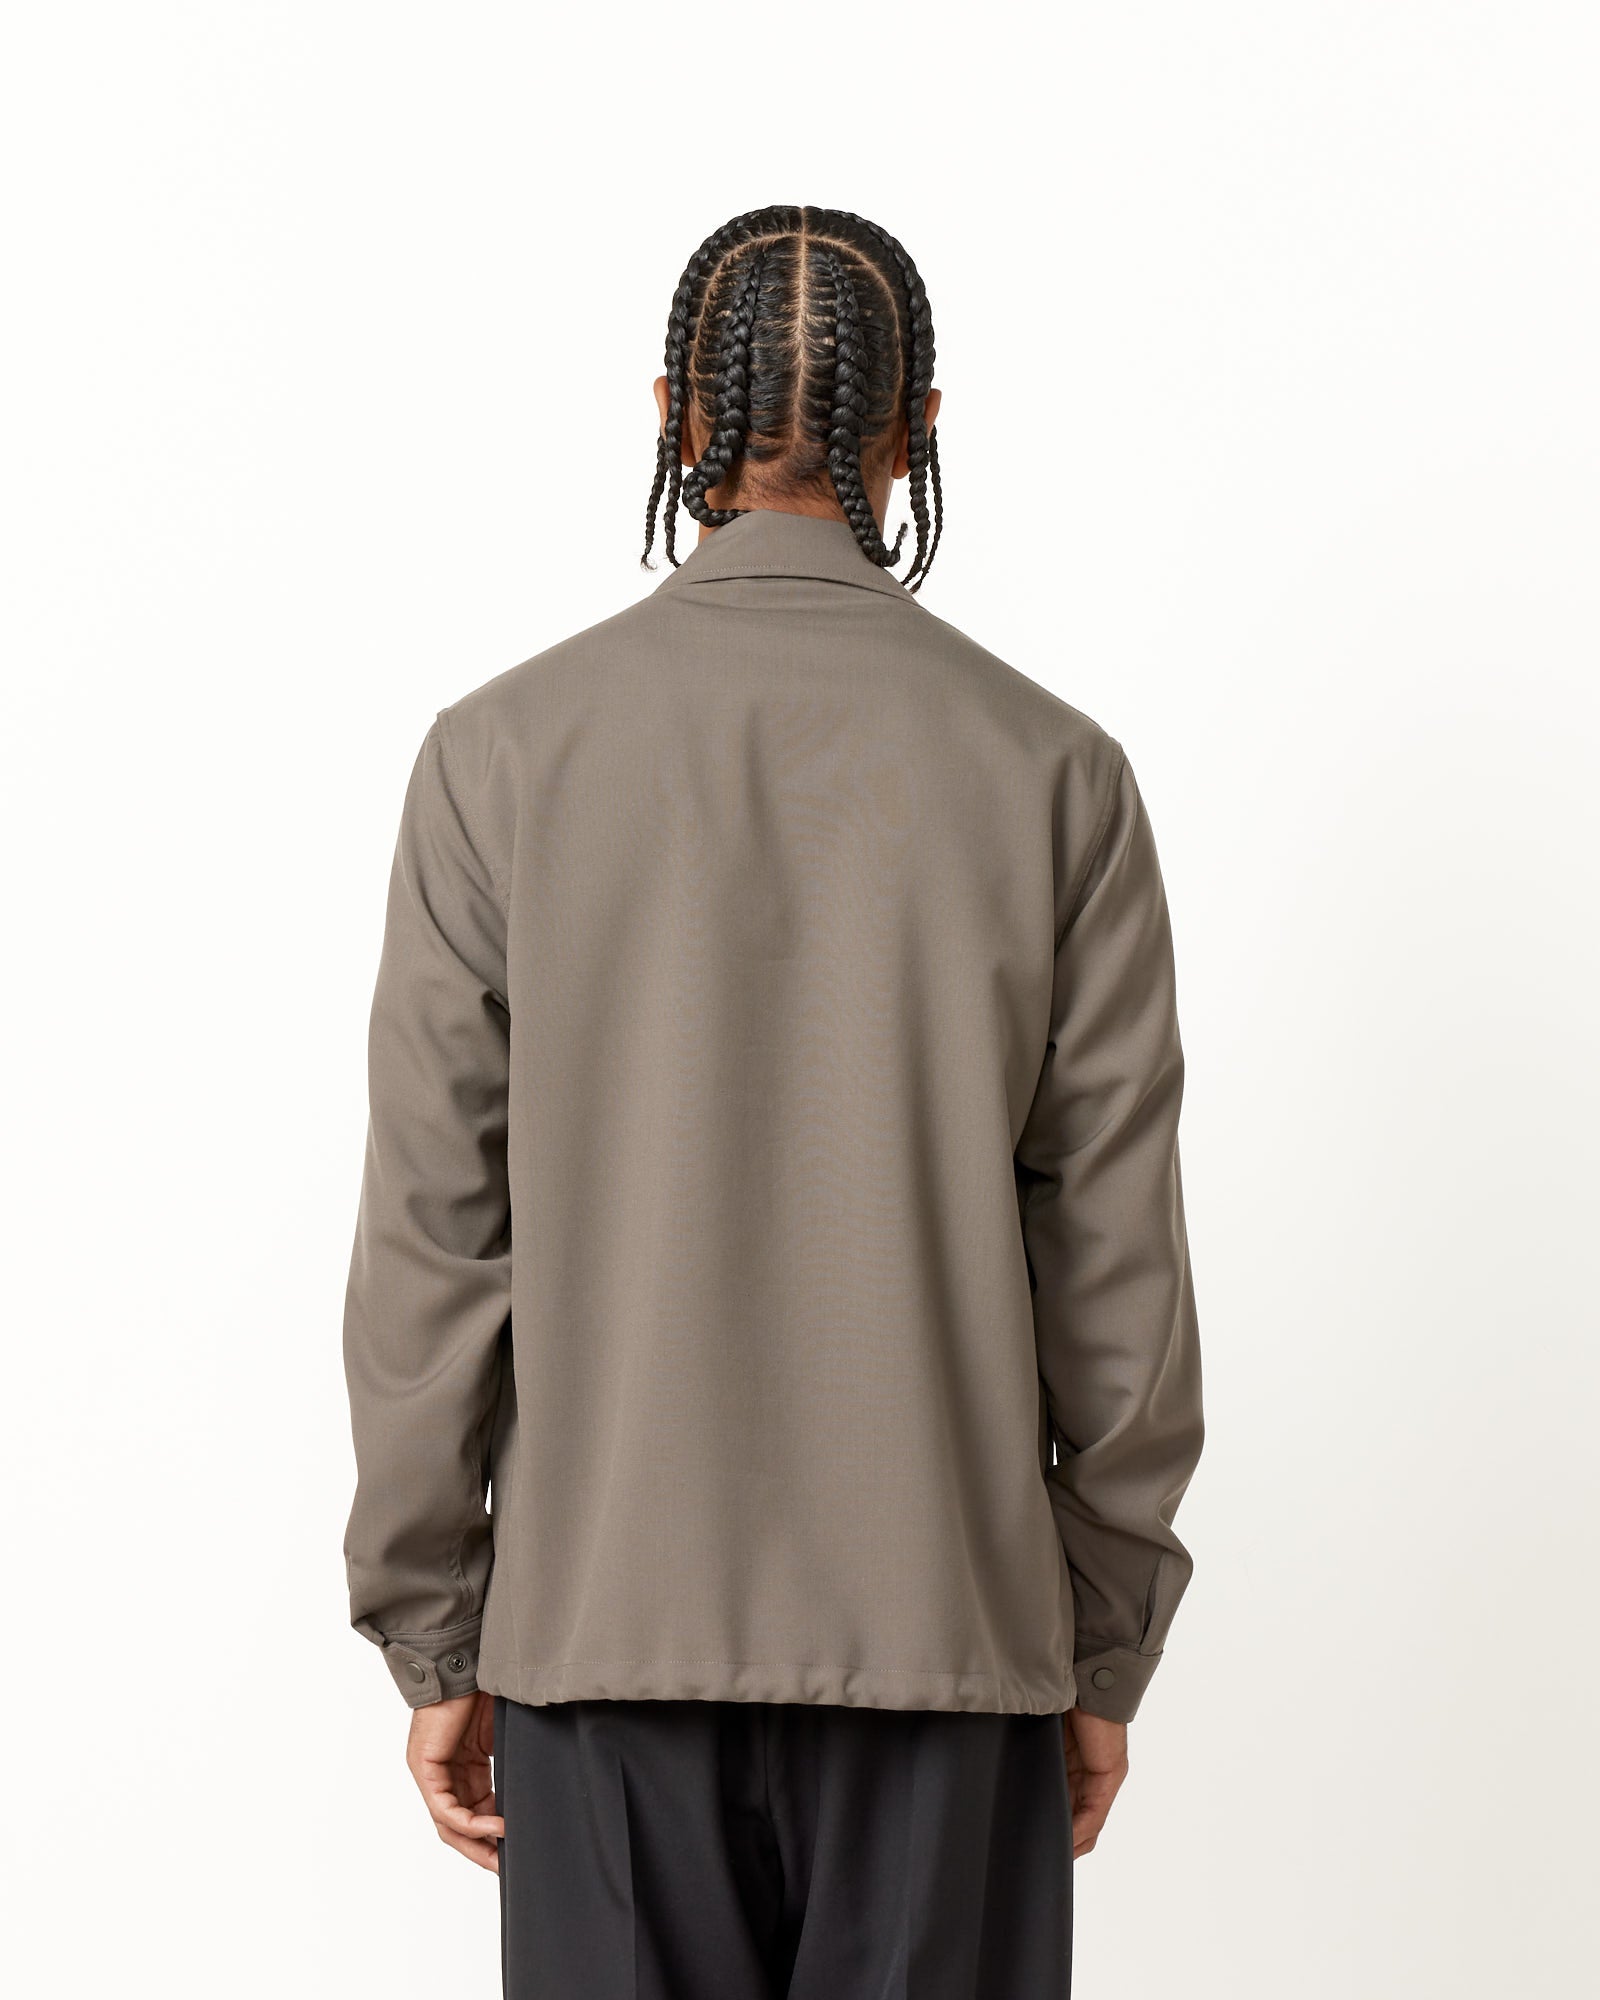 Forum Jacket in Tropical Wool Flat Grey